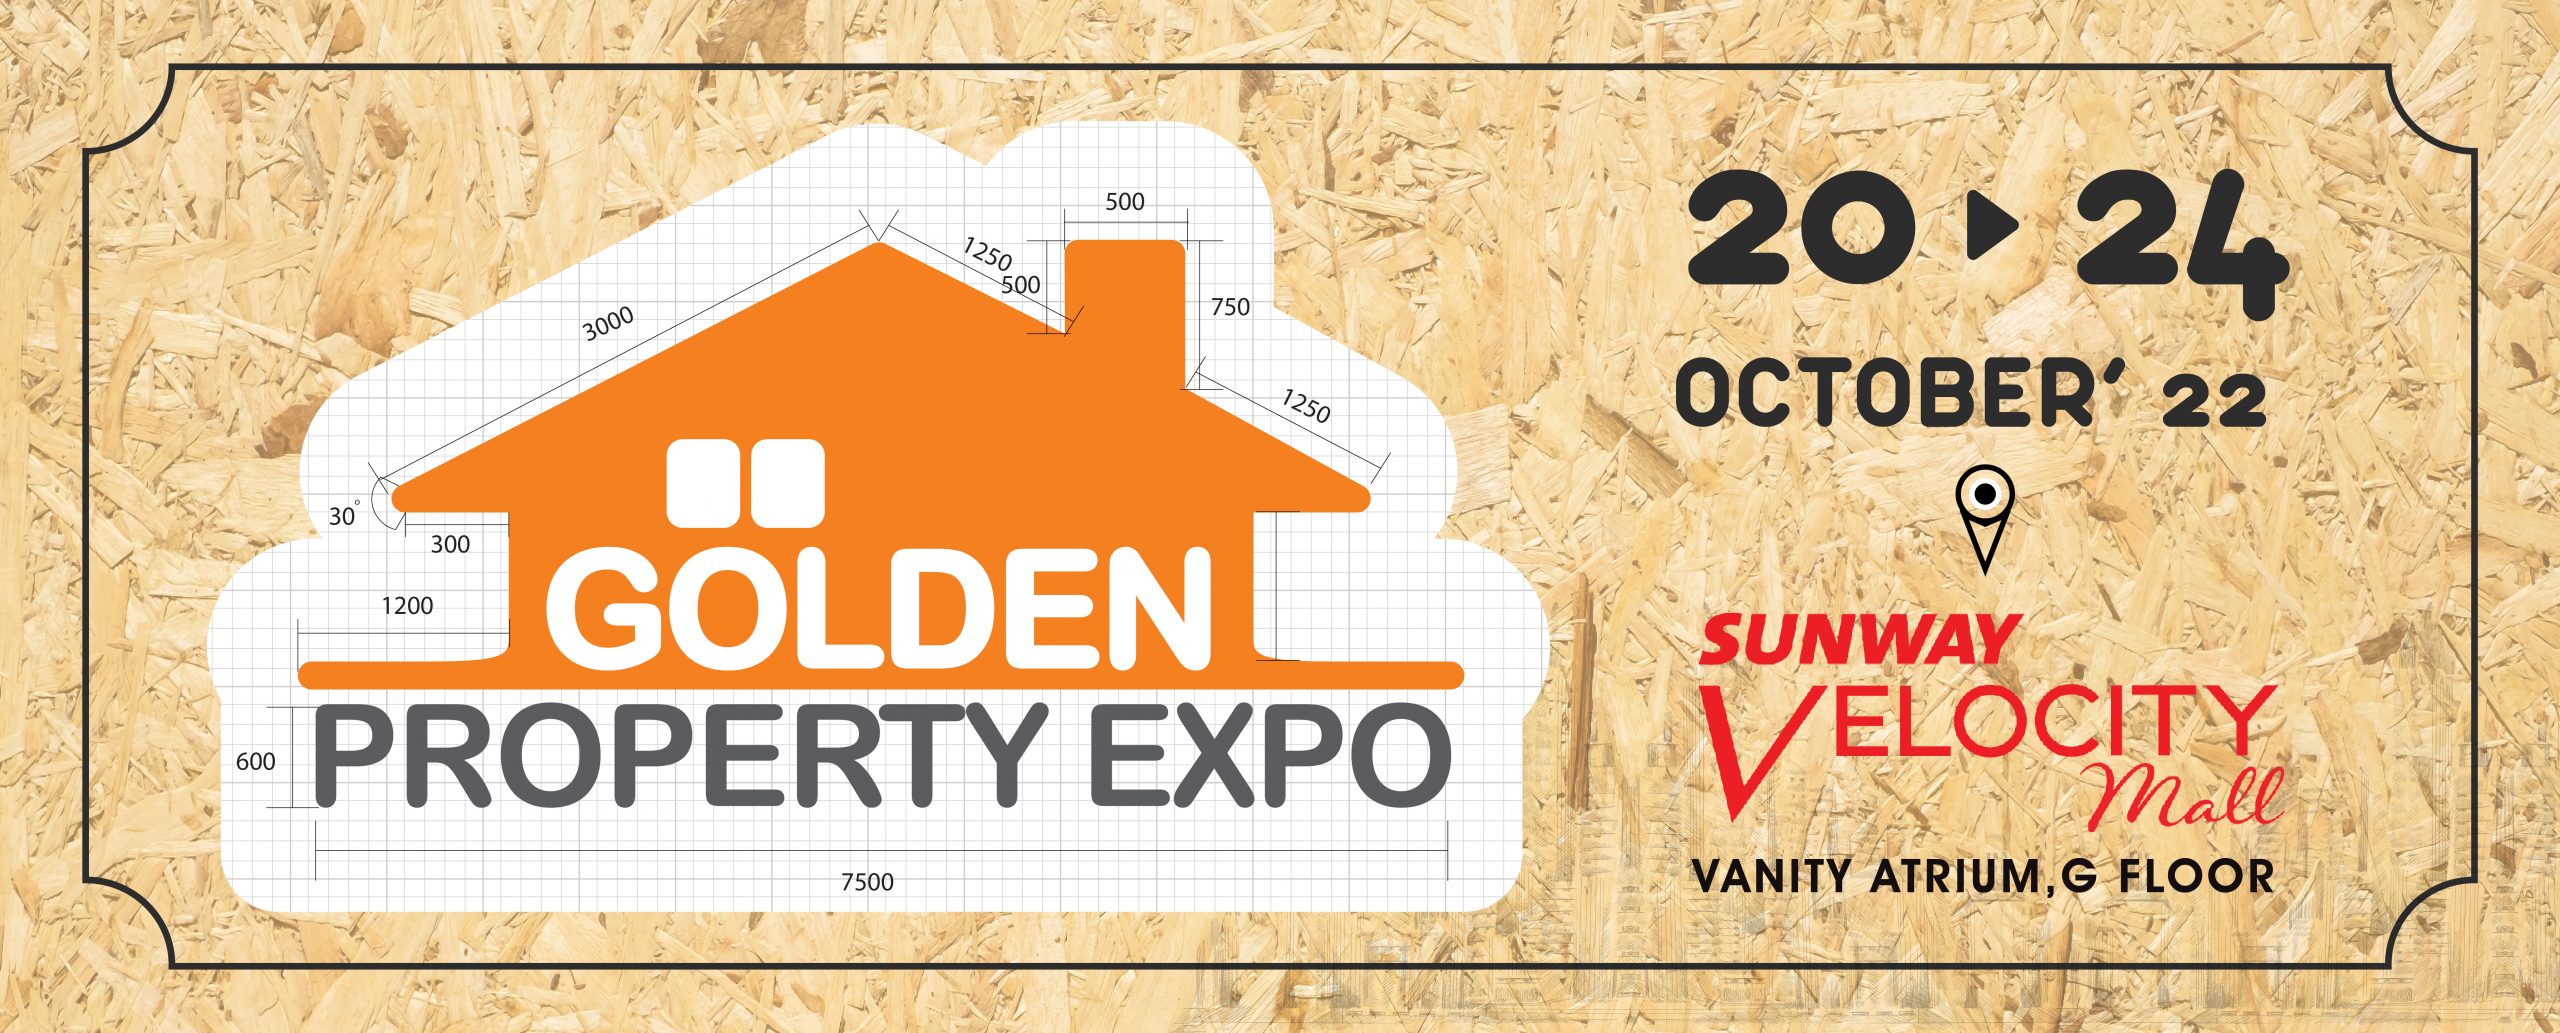 Golden Property Expo (20-24 October 2022)